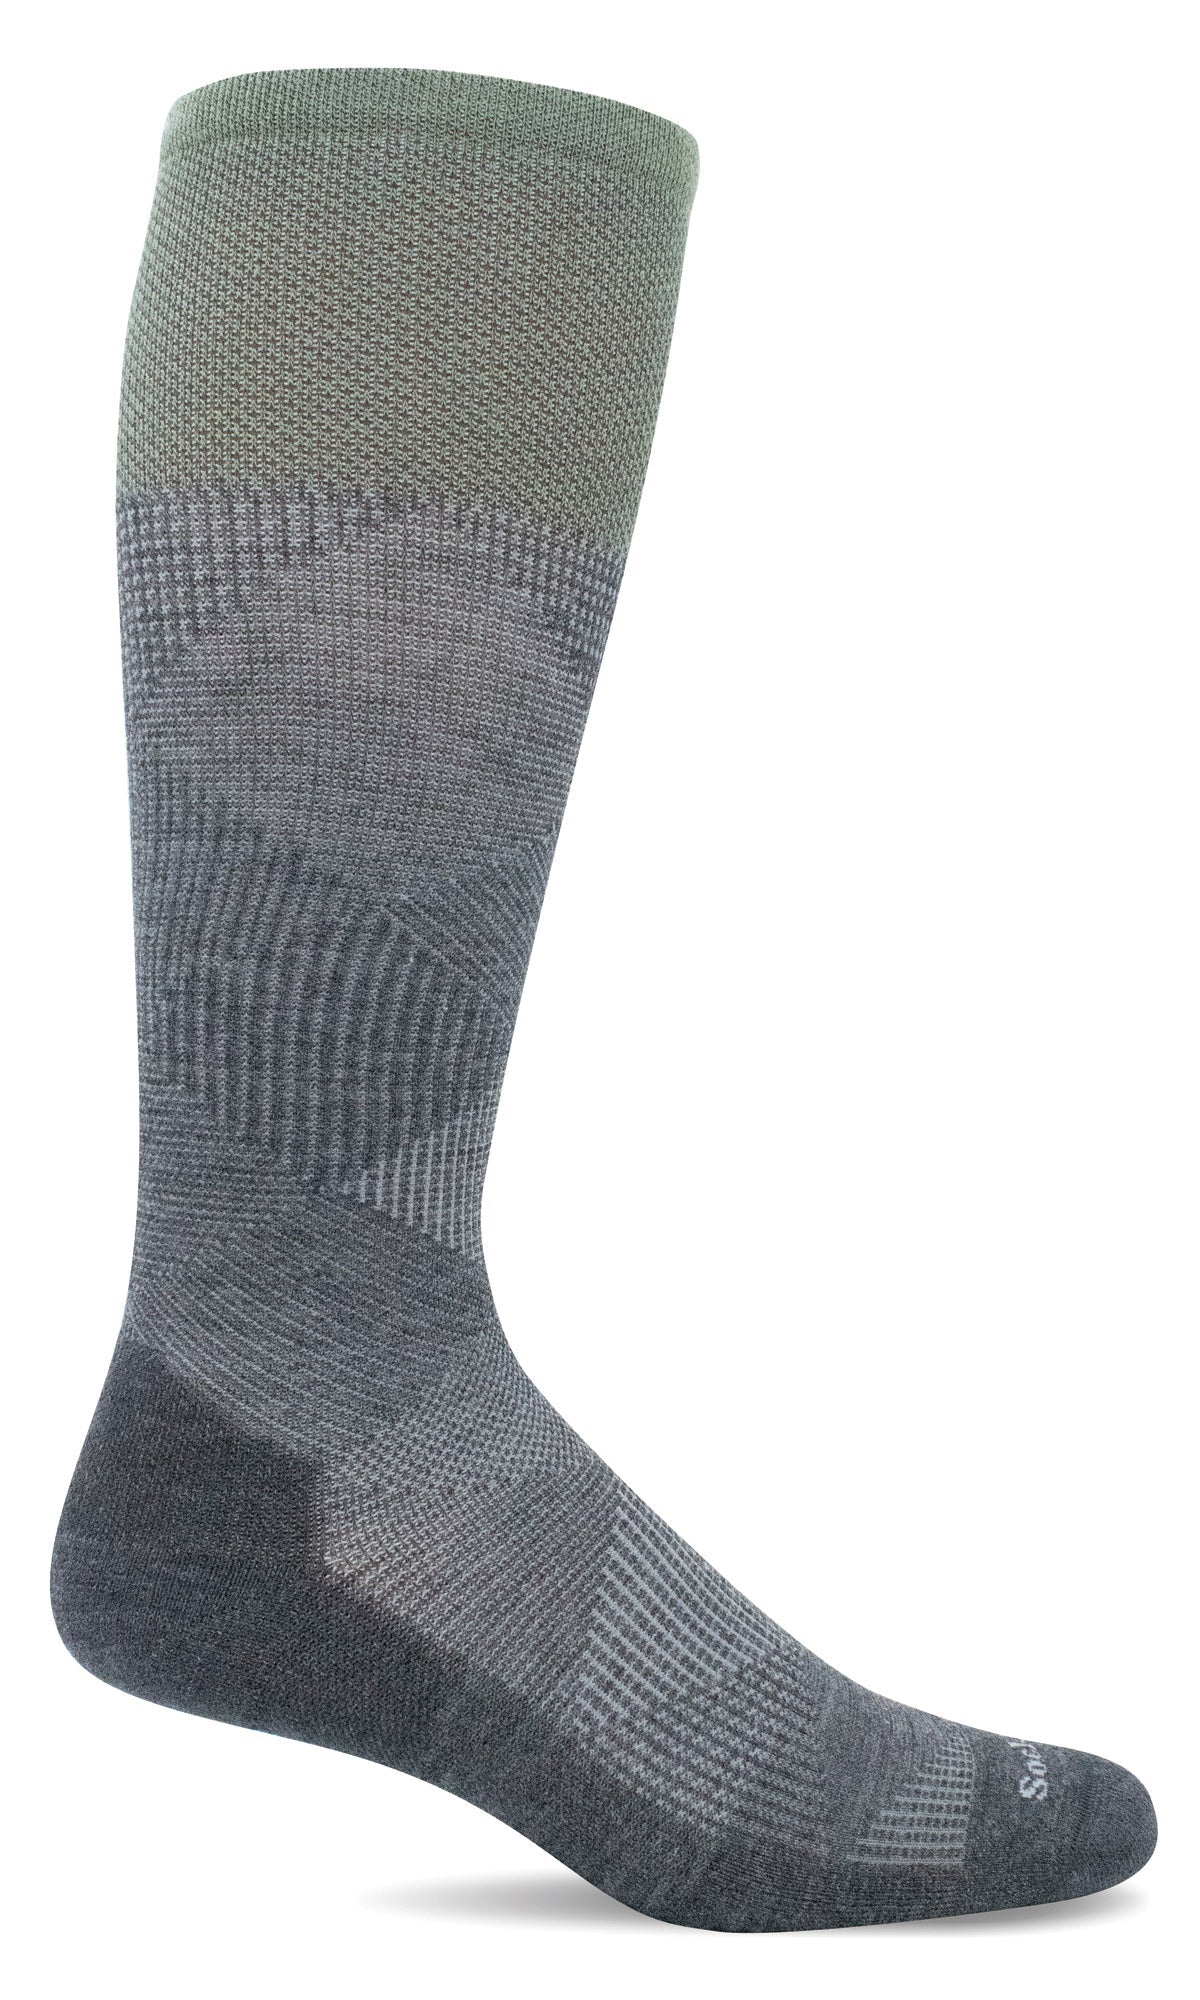 Diamond Dandy Men's Bamboo/Merino Moderate Graduated Compression Sock in Charcoal - The Sockery